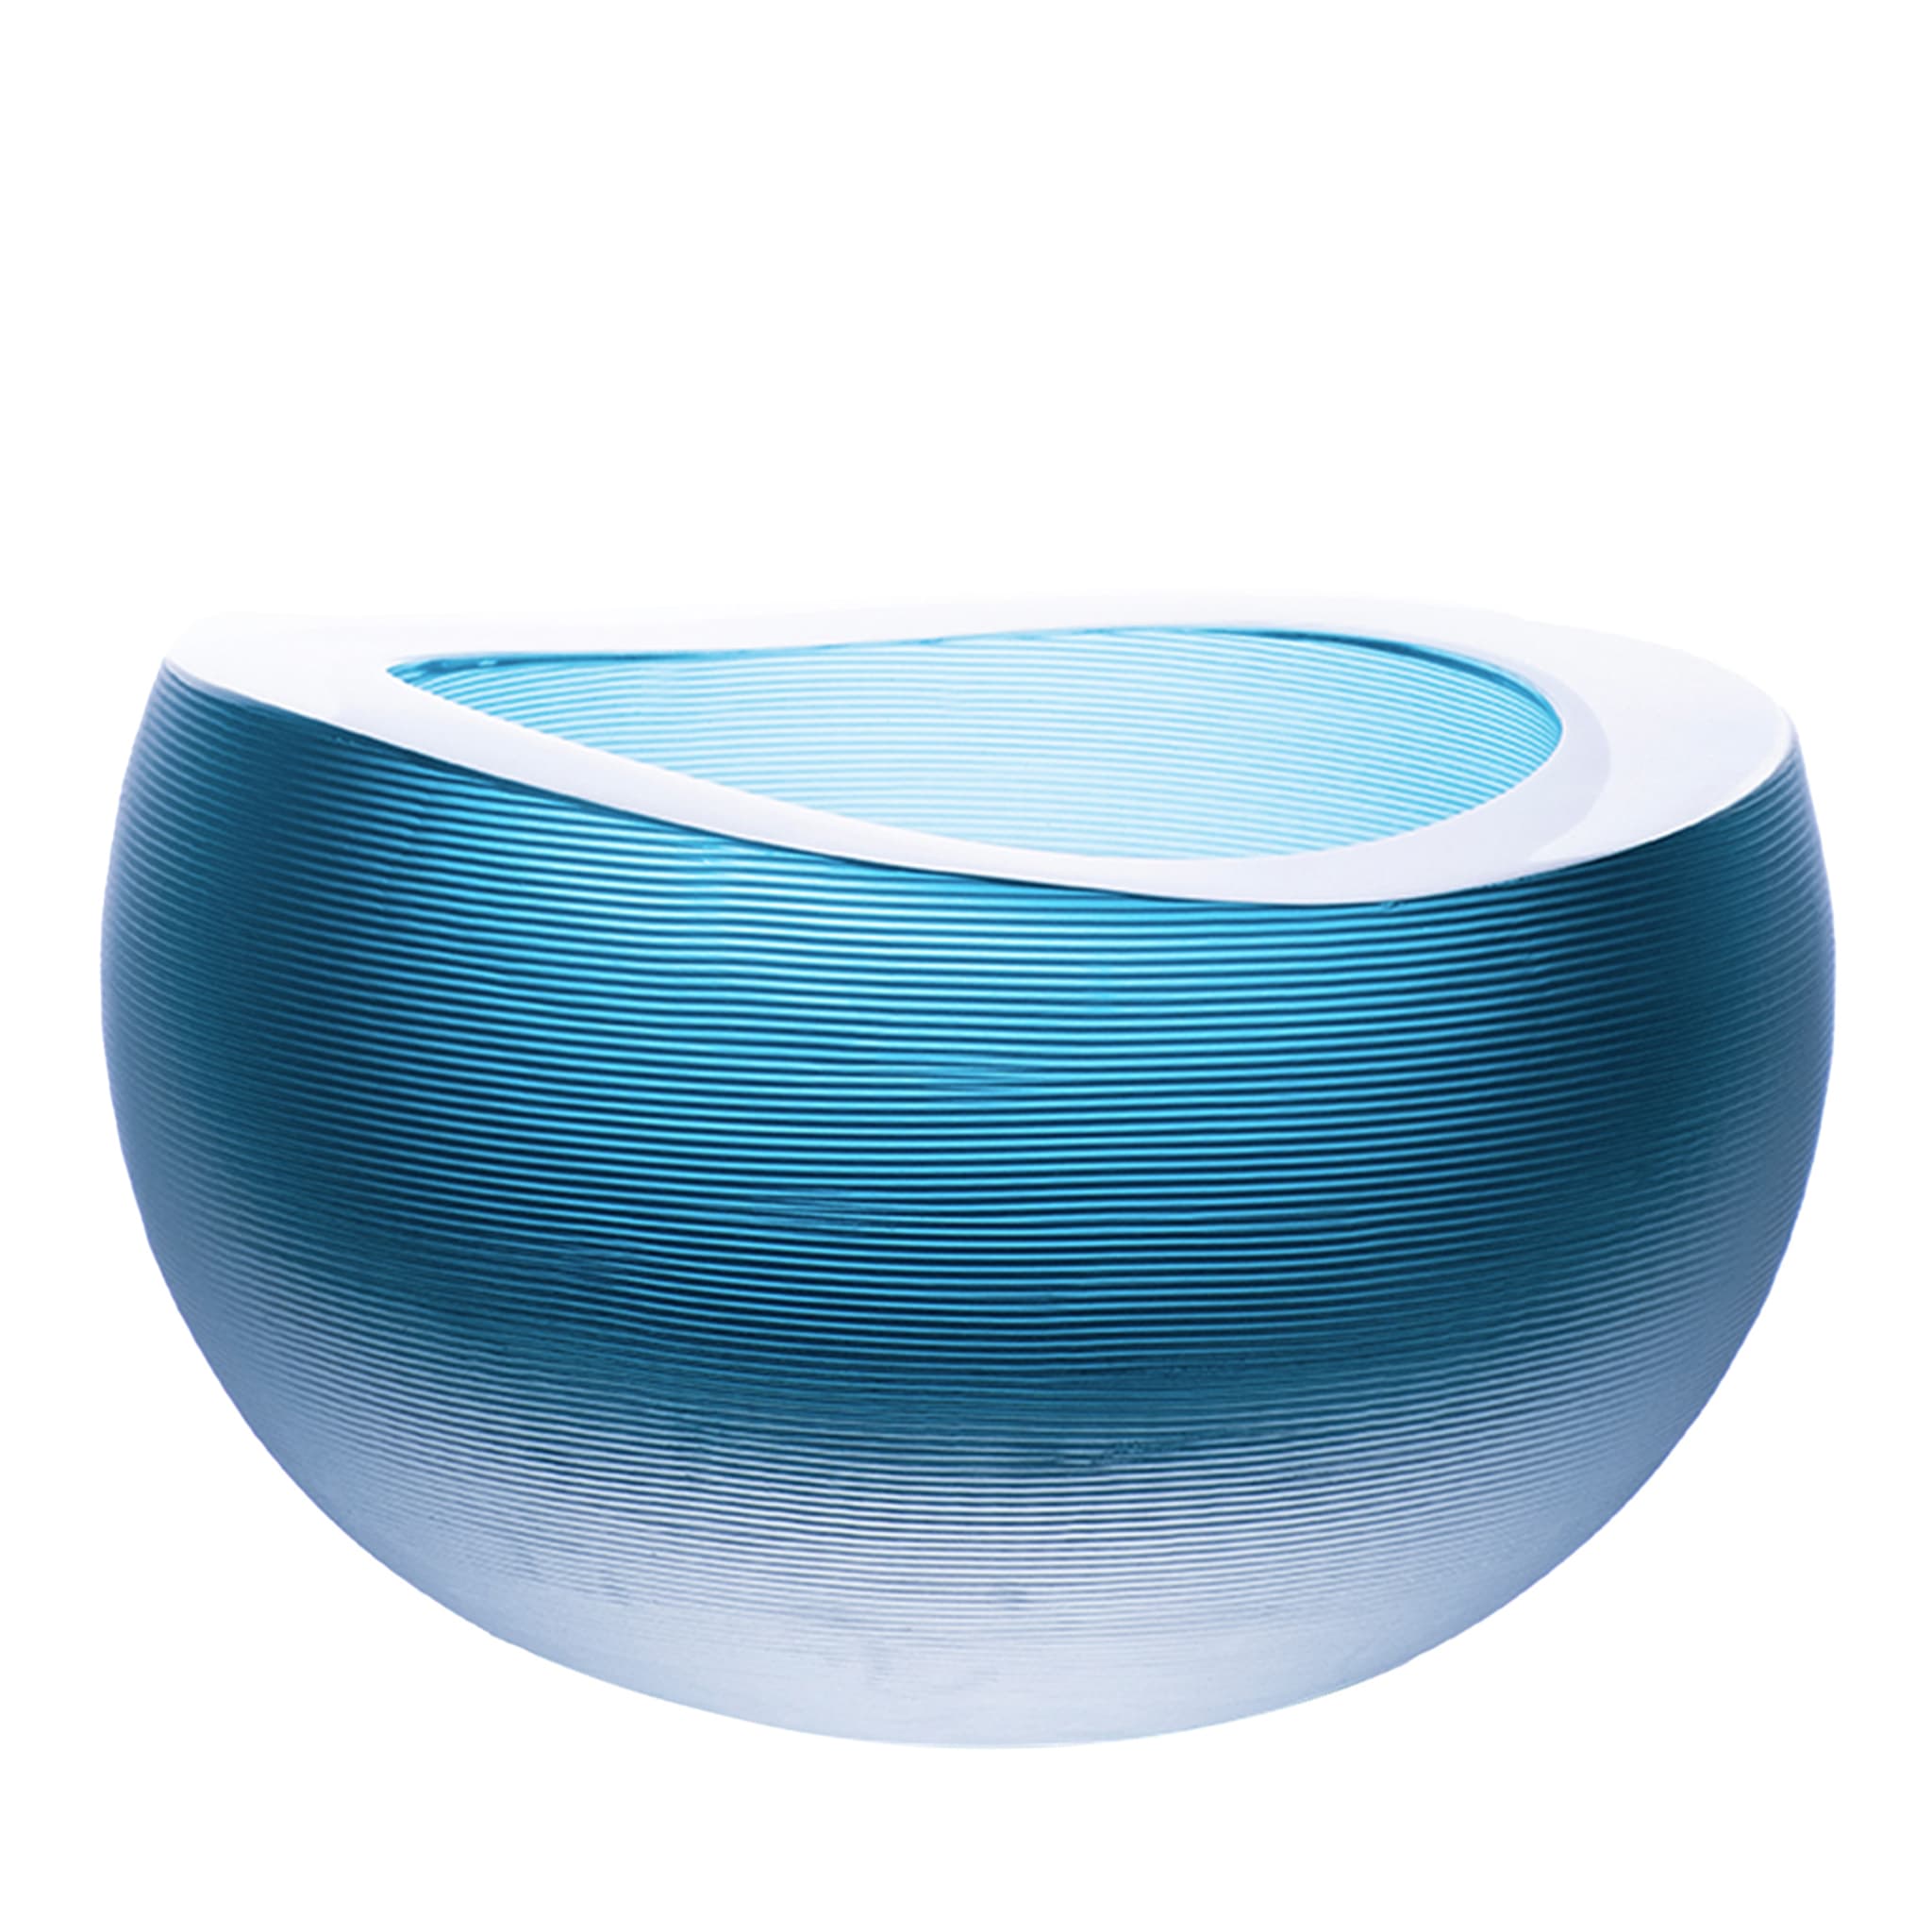 Linae Small Vase Blue by Federico Peri - Main view